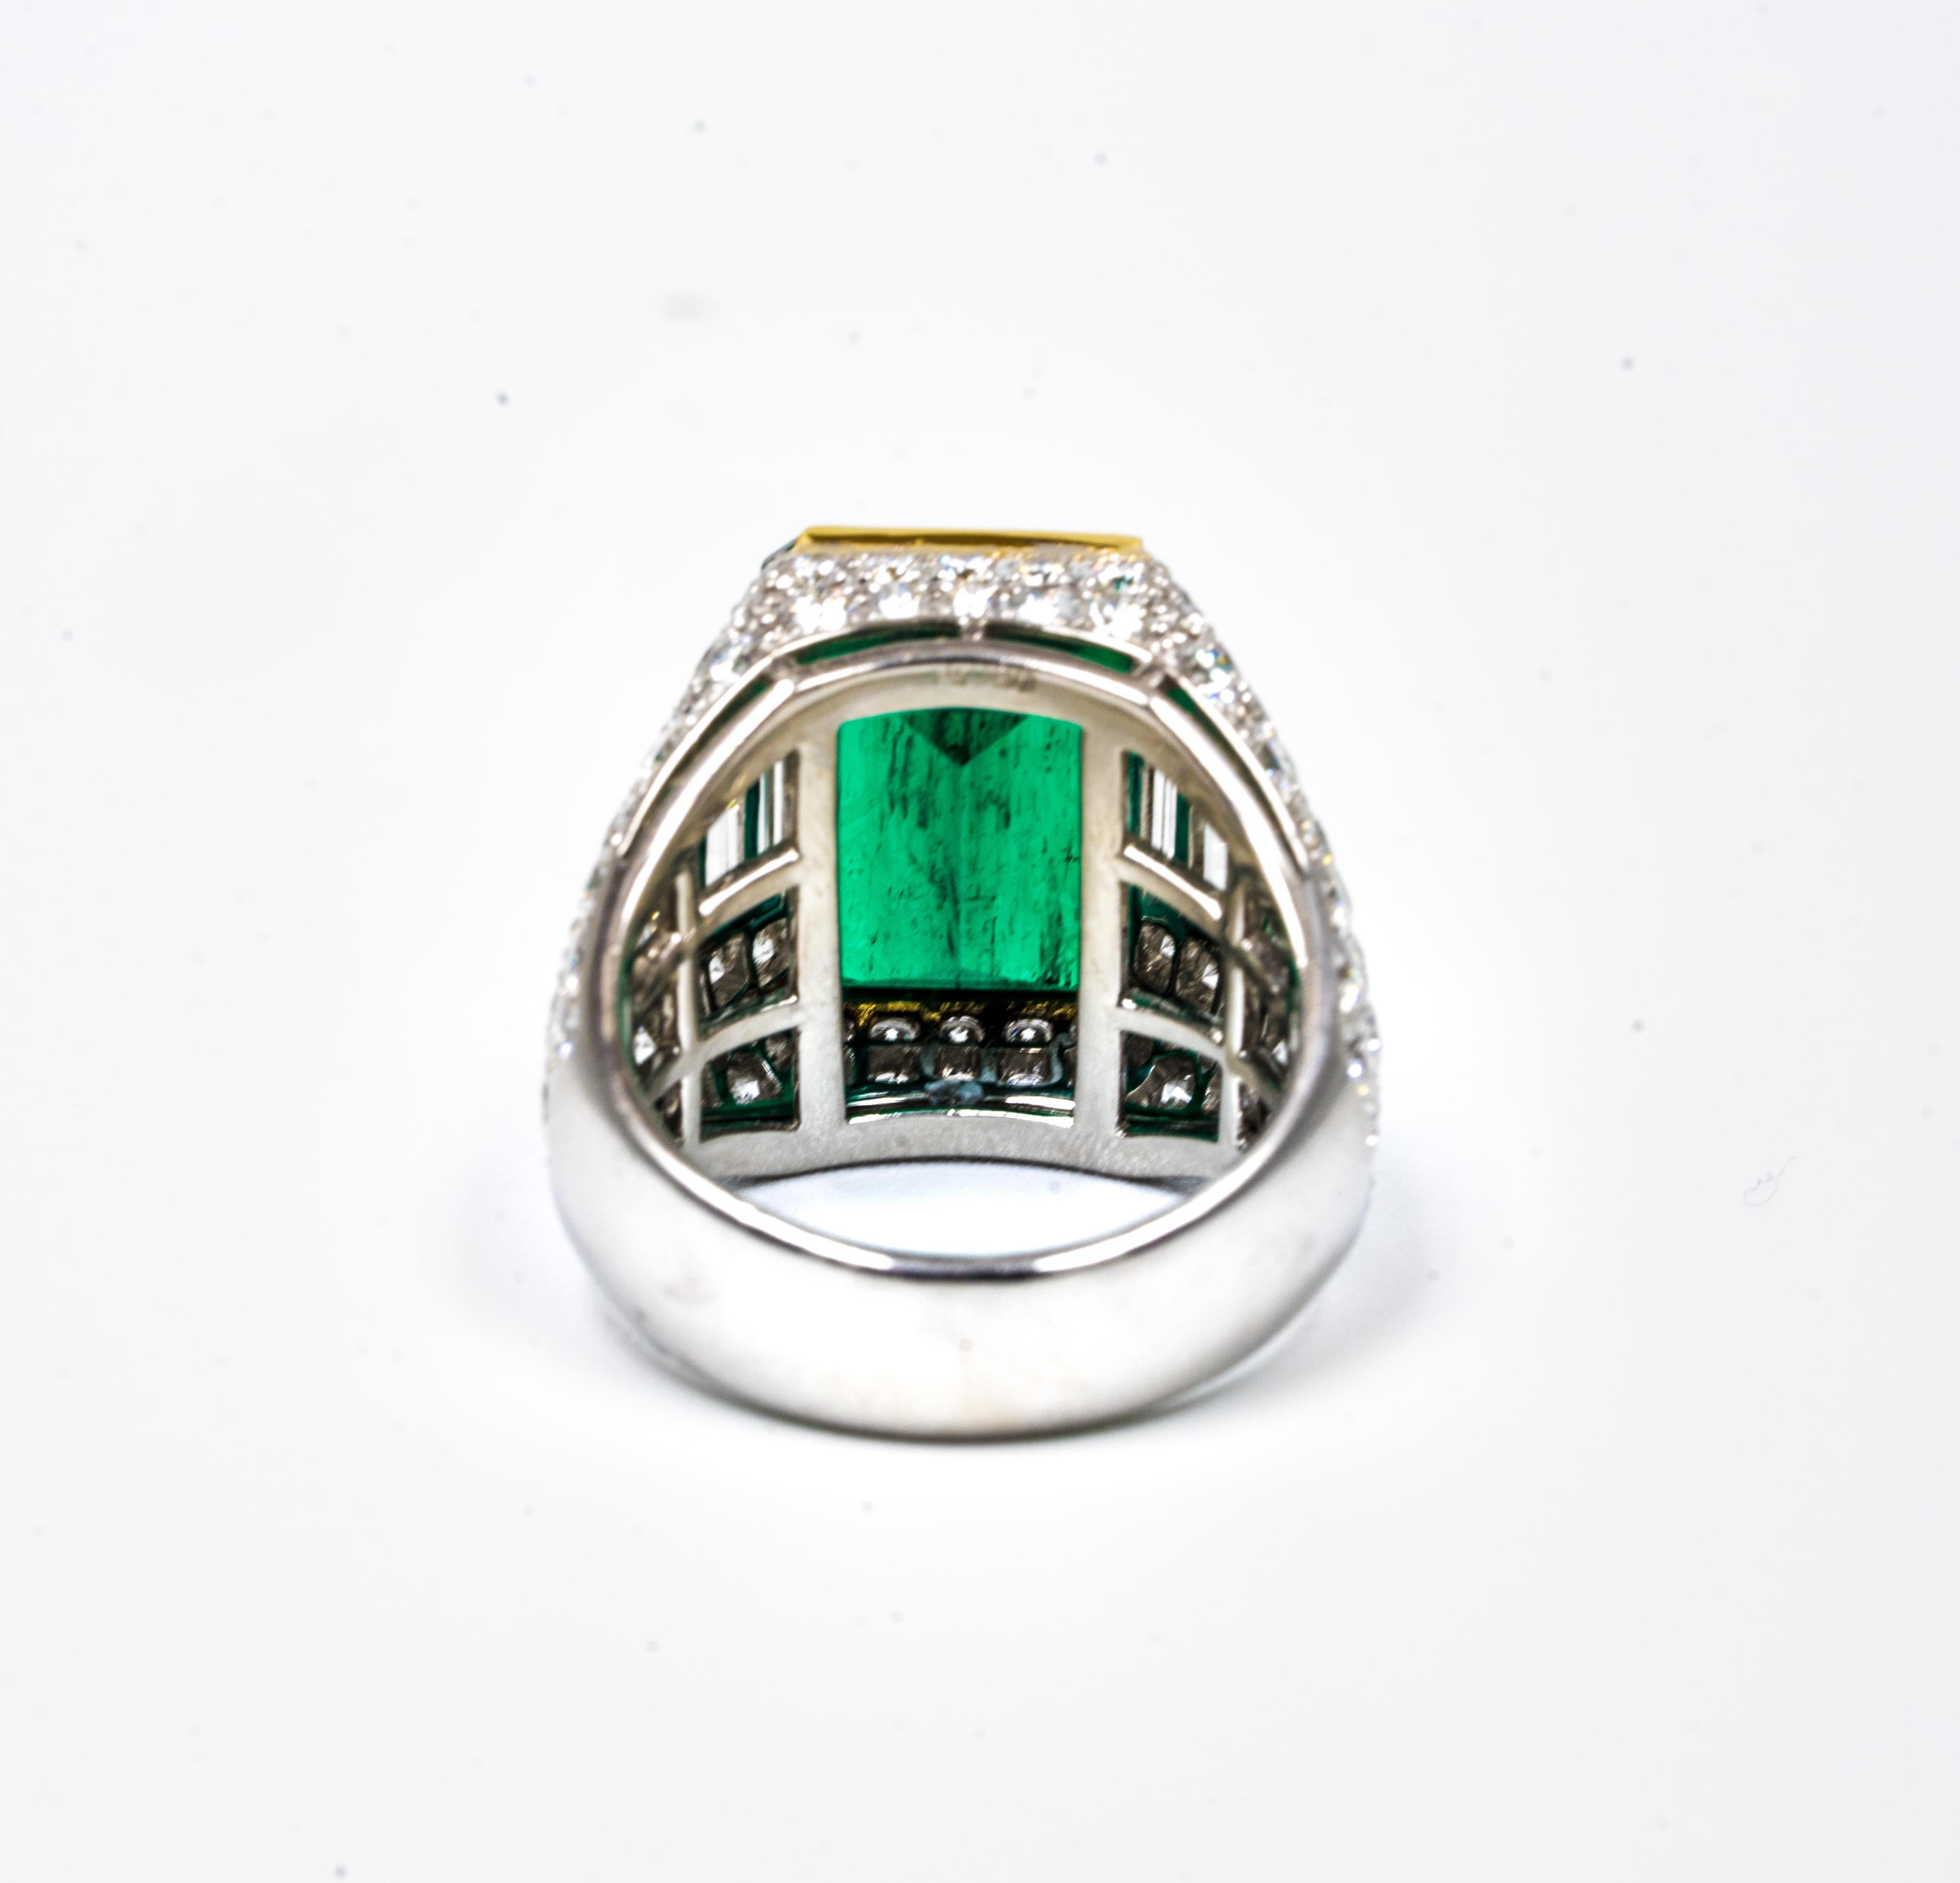 Emerald Cut 6.59 Carat Natural Emerald Diamond Ring in Platinum